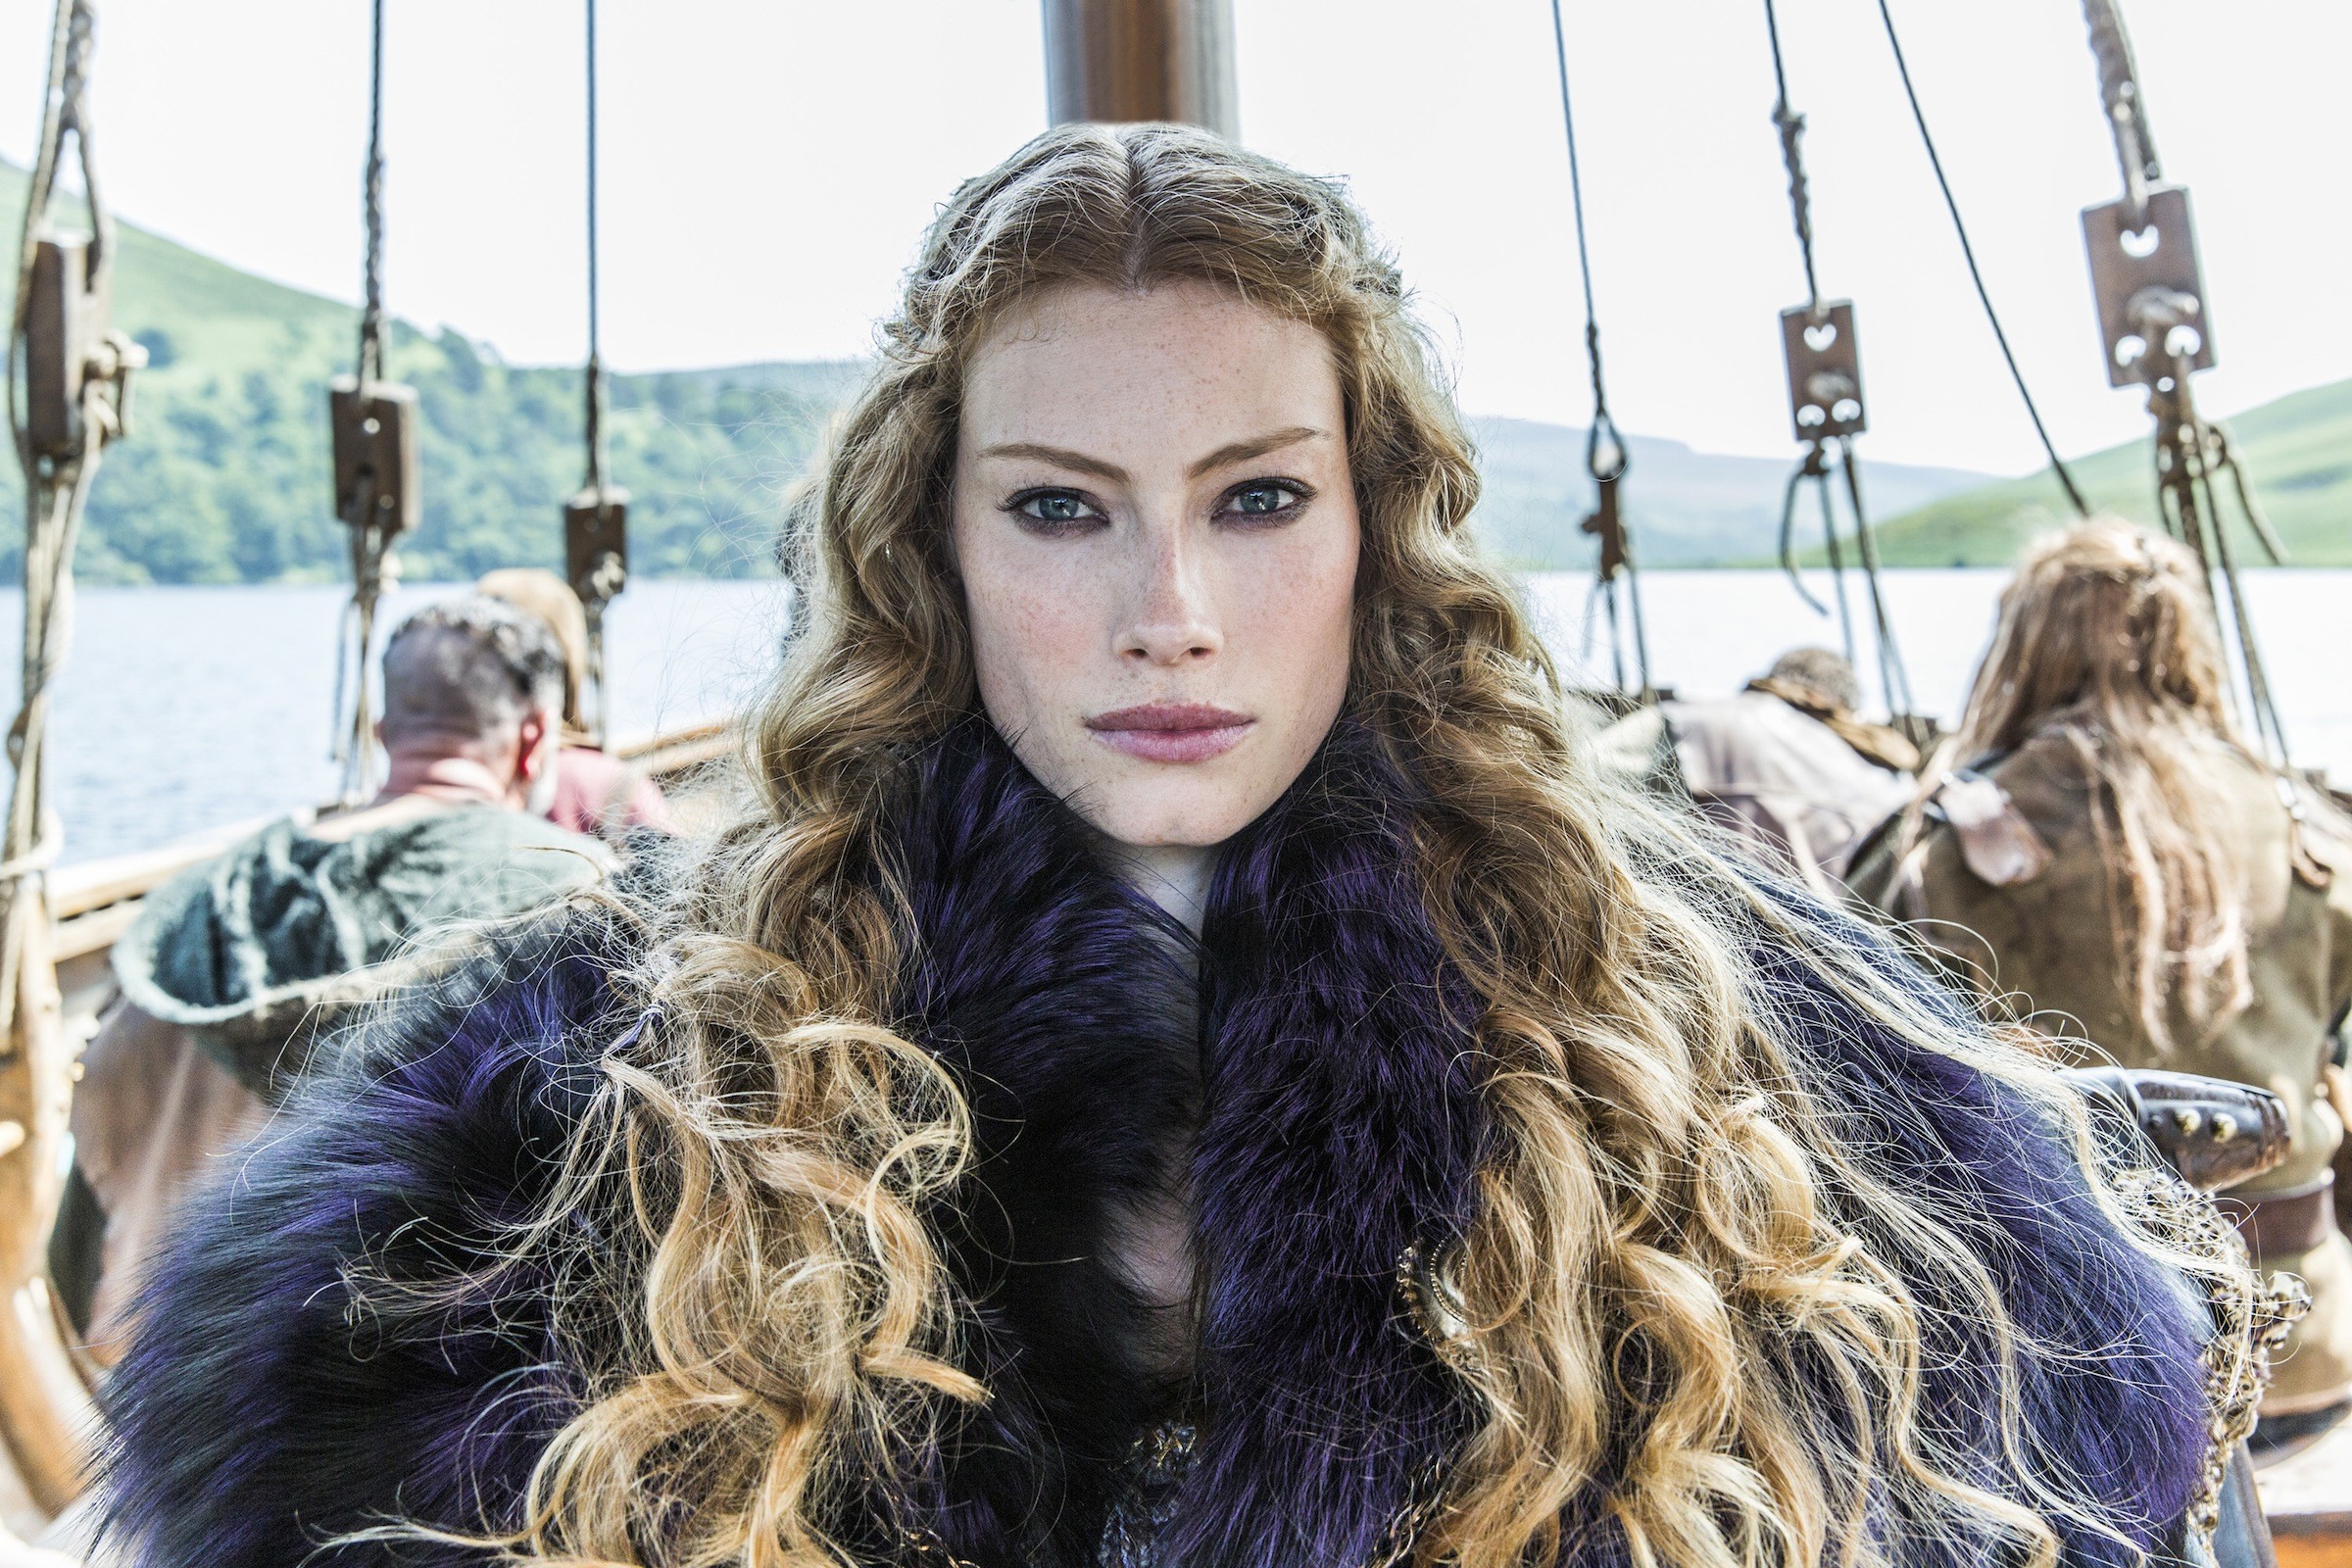 People 2400x1600 Alyssa Sutherland Aslaug women Vikings (TV series) fantasy girl long hair blonde looking at viewer TV series actress closeup